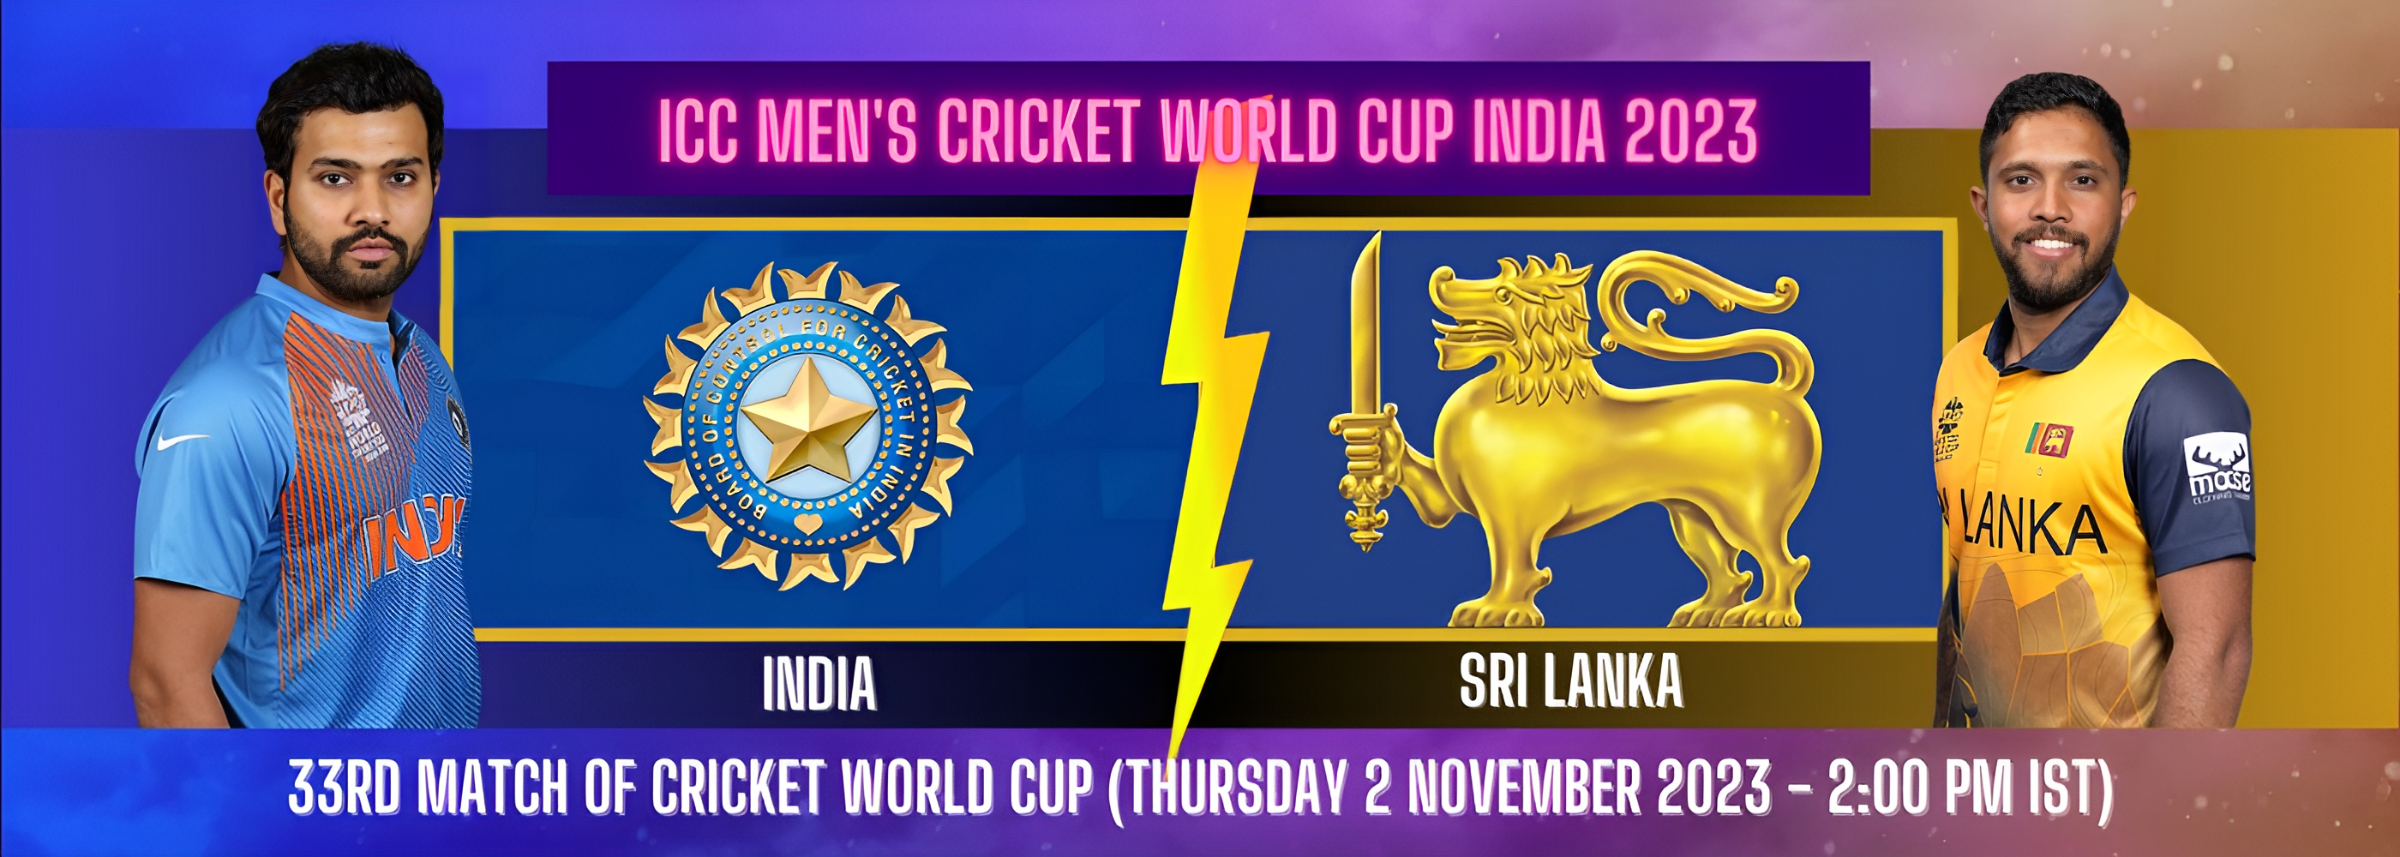 India vs Sri Lanka 33rd Match of Cricket World Cup (Thursday 2 November 2023 - 200 PM IST)